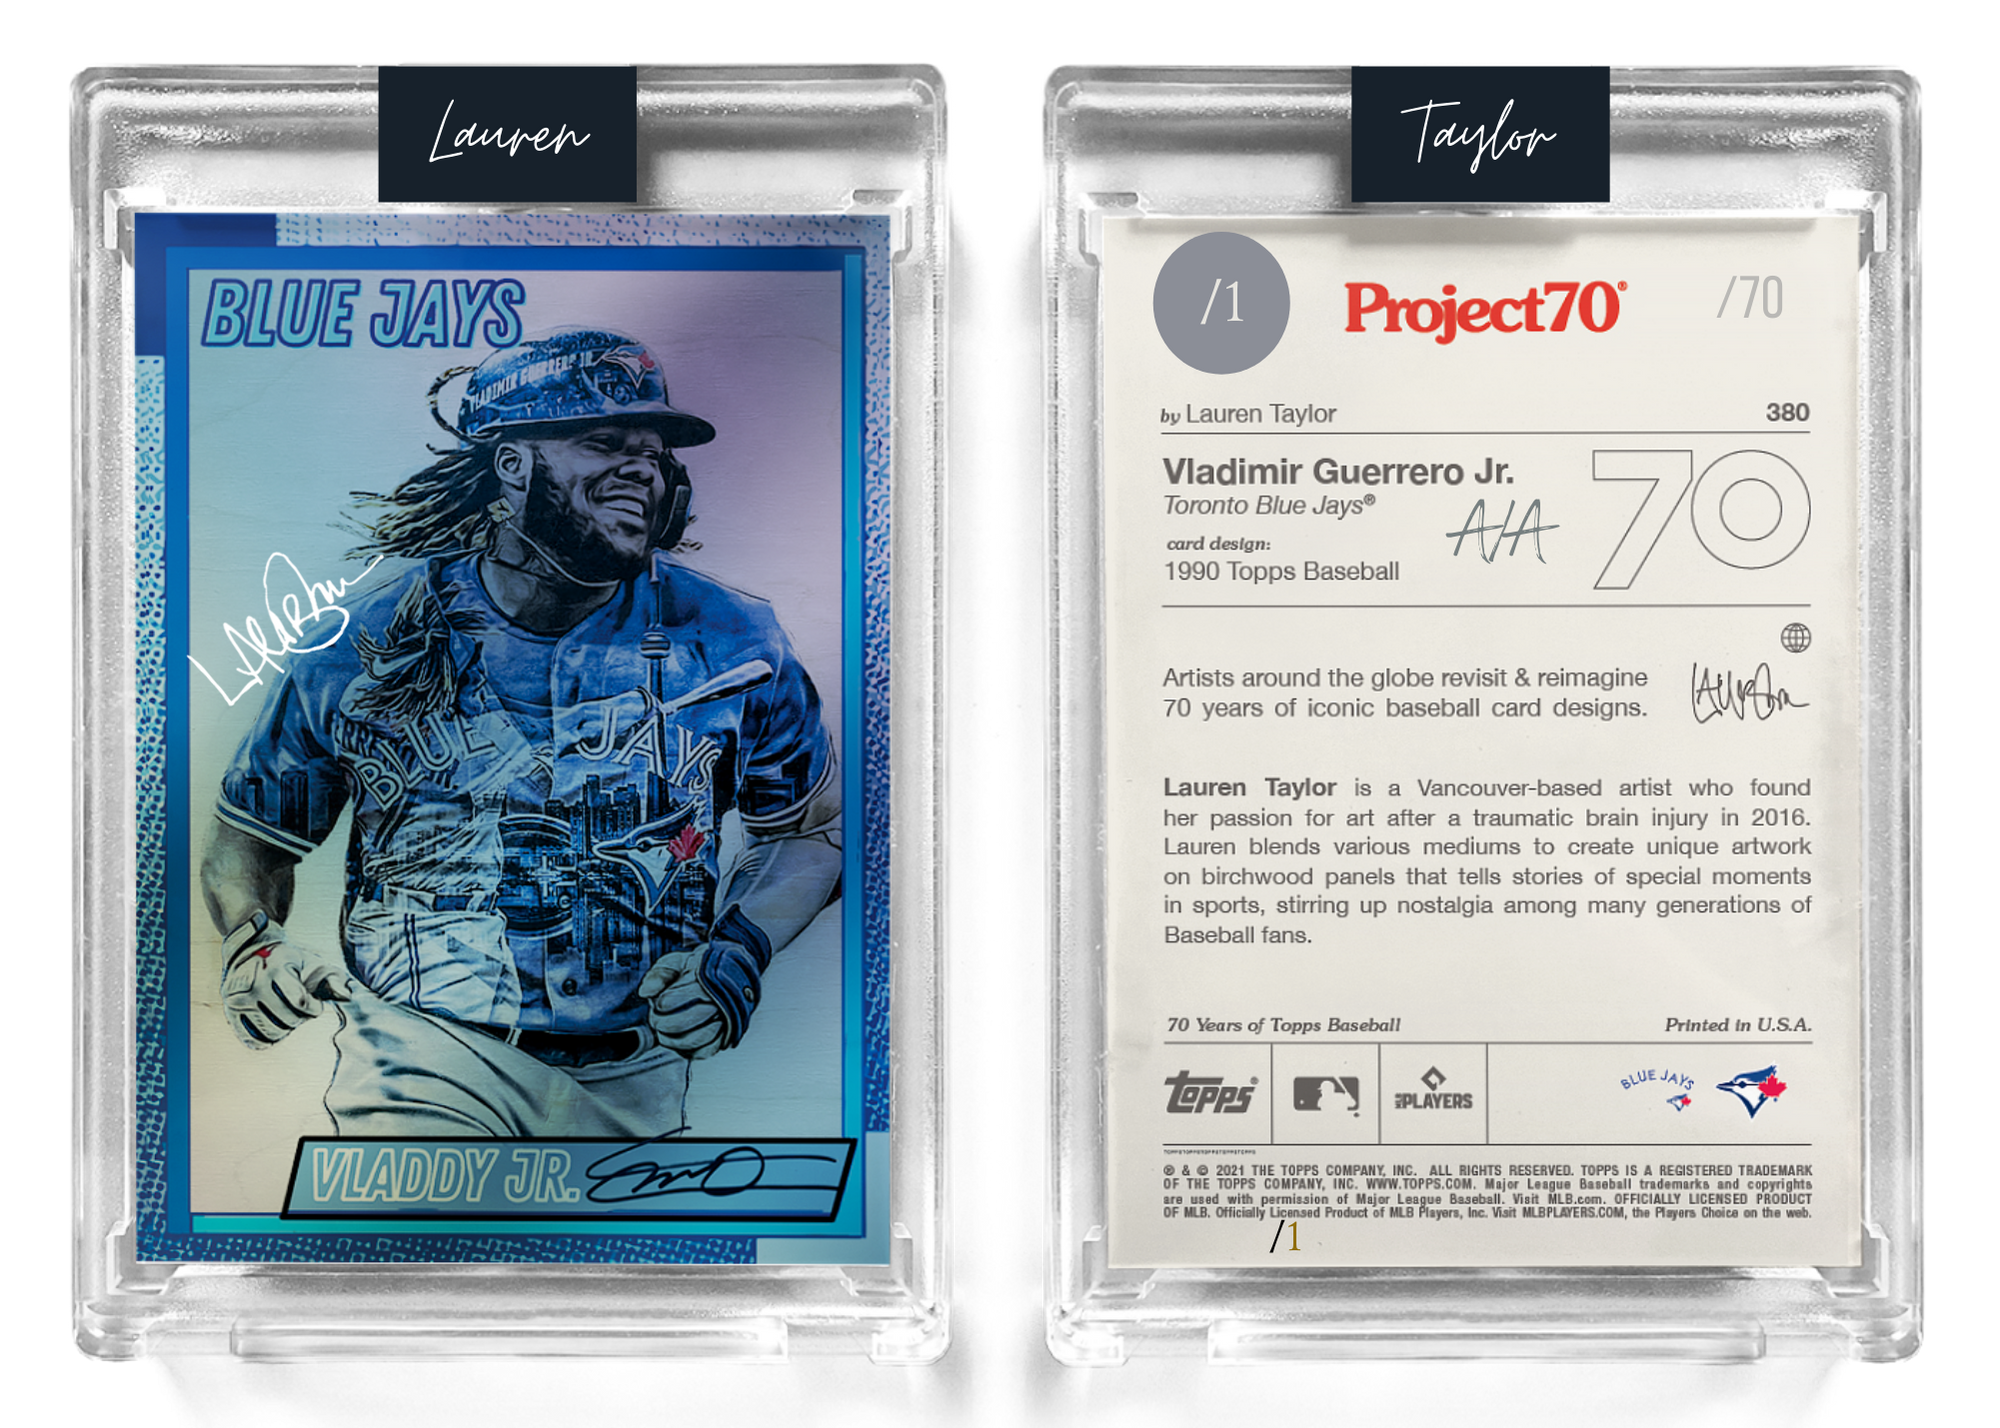 1/1 Chrome Metallic Artist Signature - Foil Variant 130pt Card  - Topps Project 70 130pt card #380 by Lauren Taylor - Vladimir Guerrero Jr.